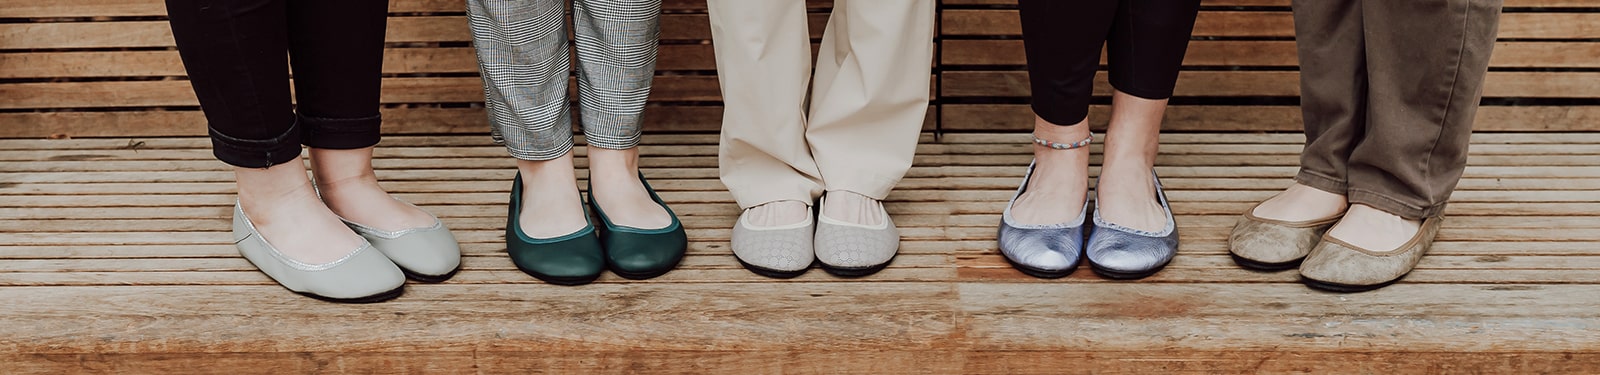 barefoot-dress-shoes